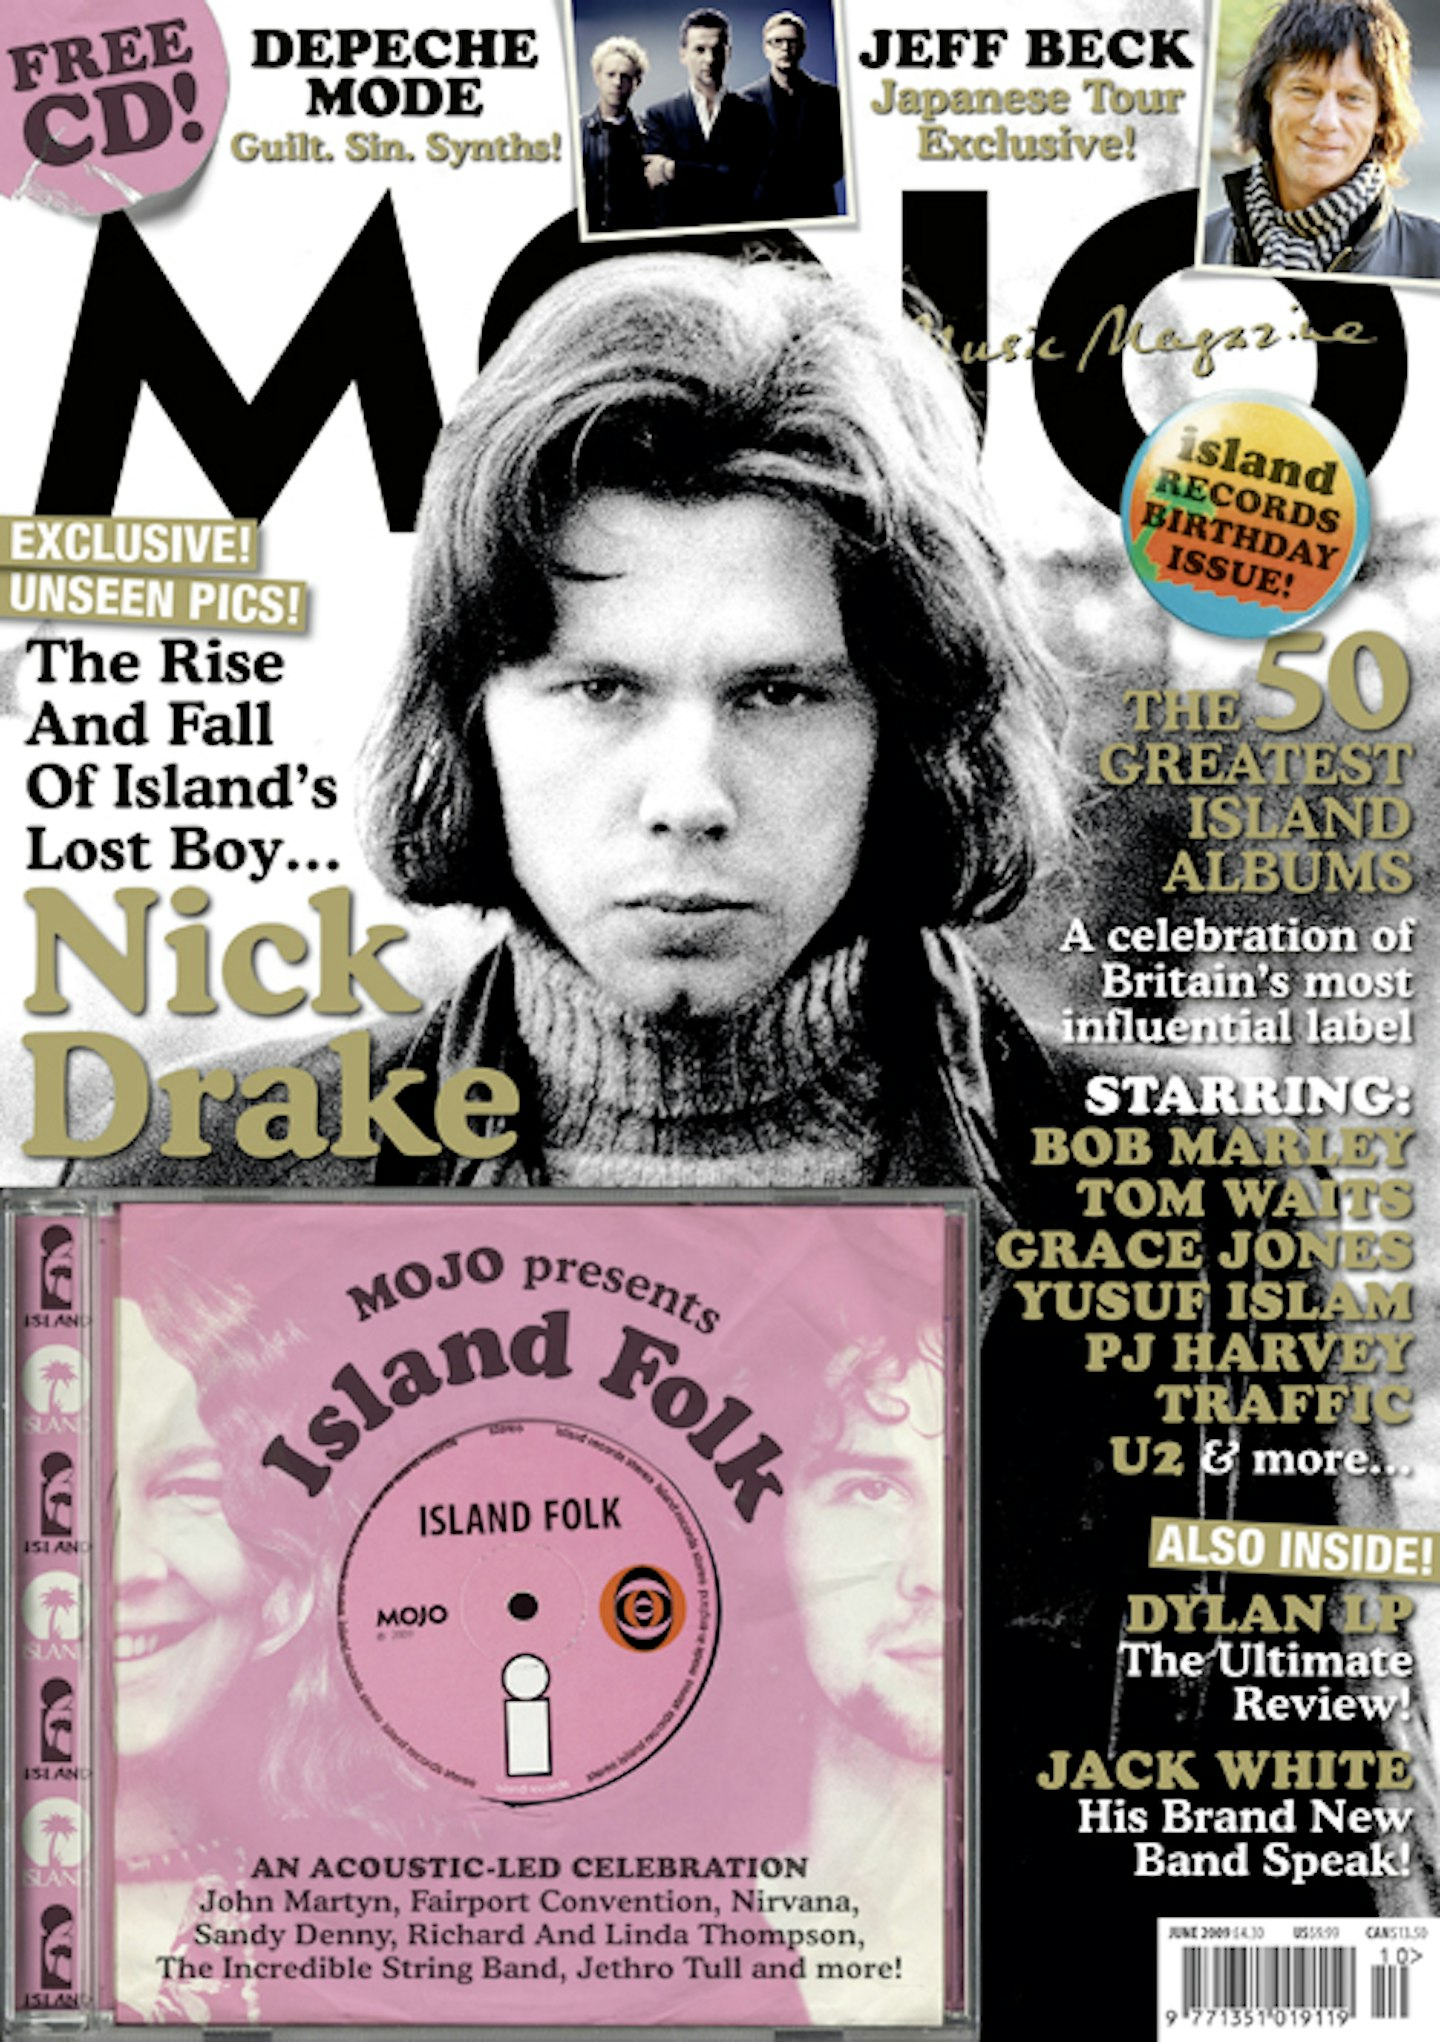 MOJO Issue 187 / June 2009